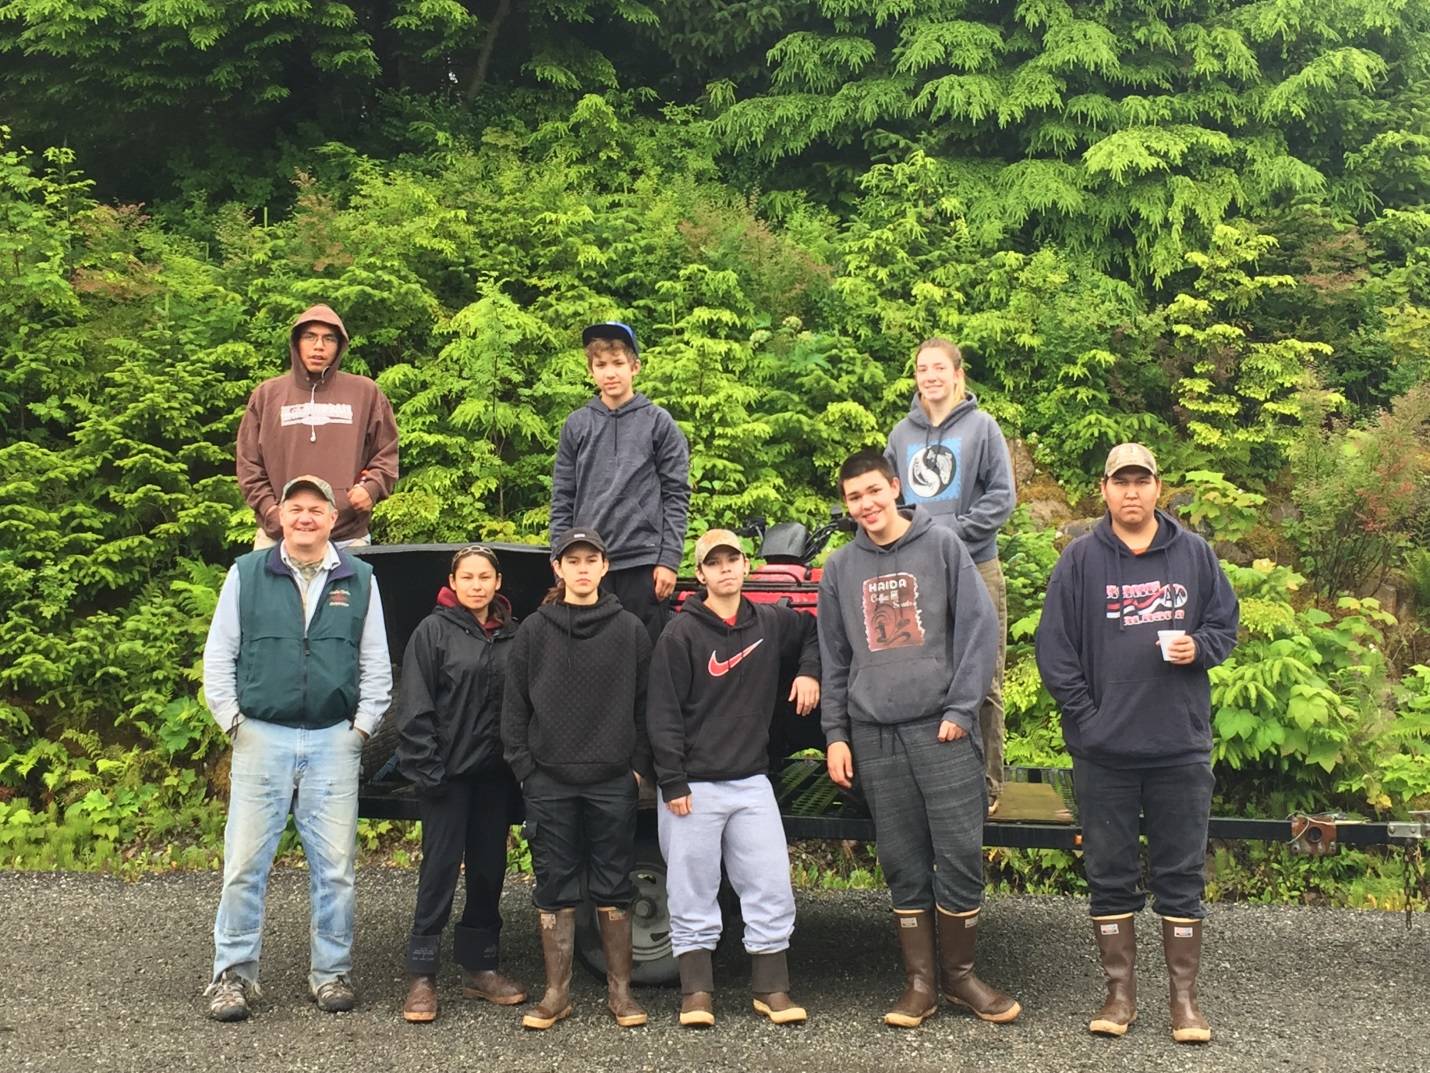 TRAYLS program brings job experience to Southeast Alaska youth